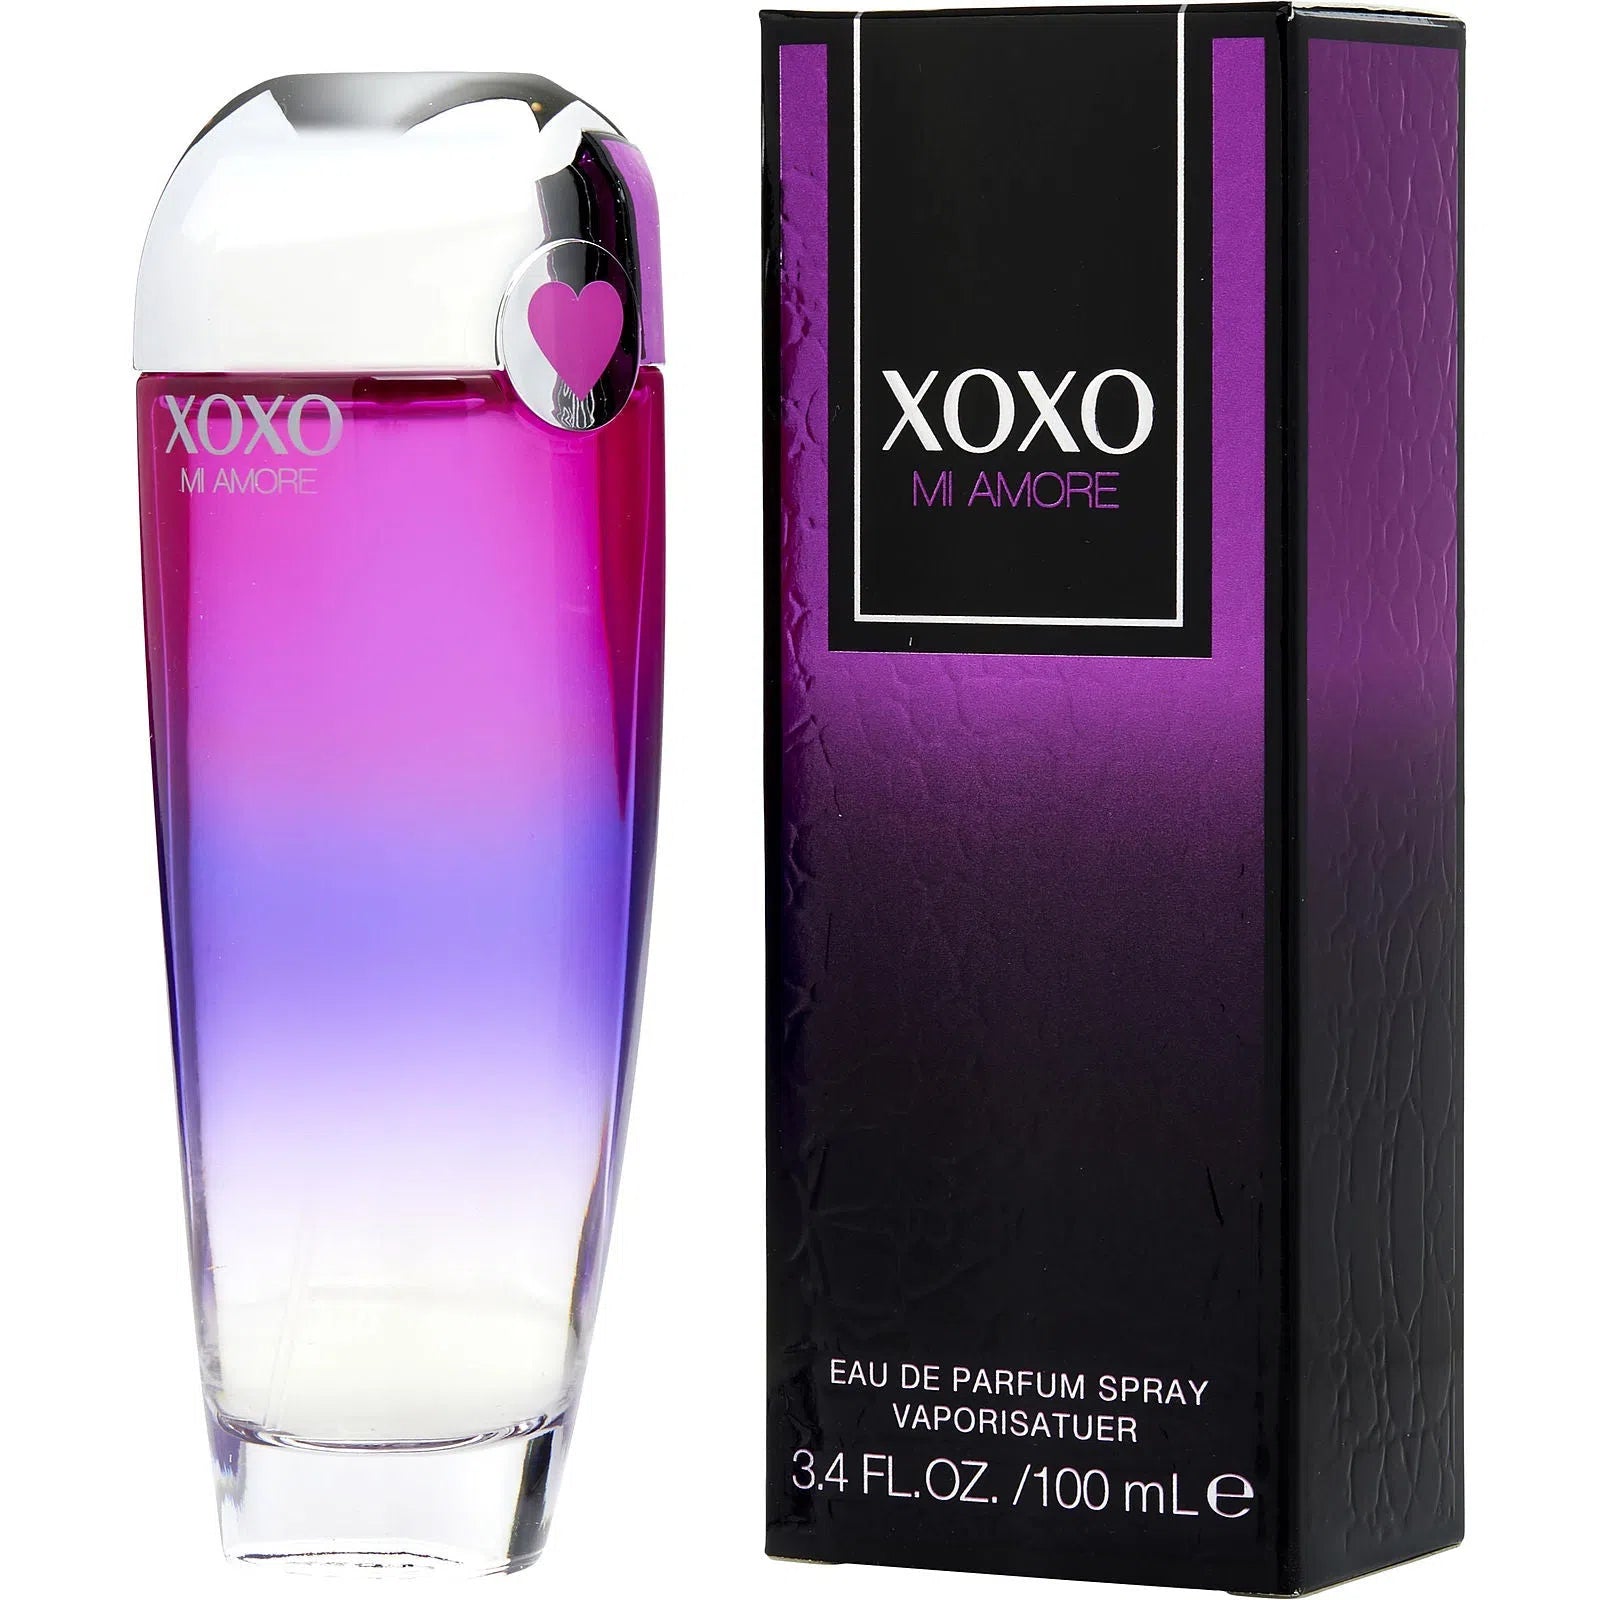 Perfume XOXO Mi Amore EDP (W) / 100 ml - 603531001838- Prive Perfumes Honduras